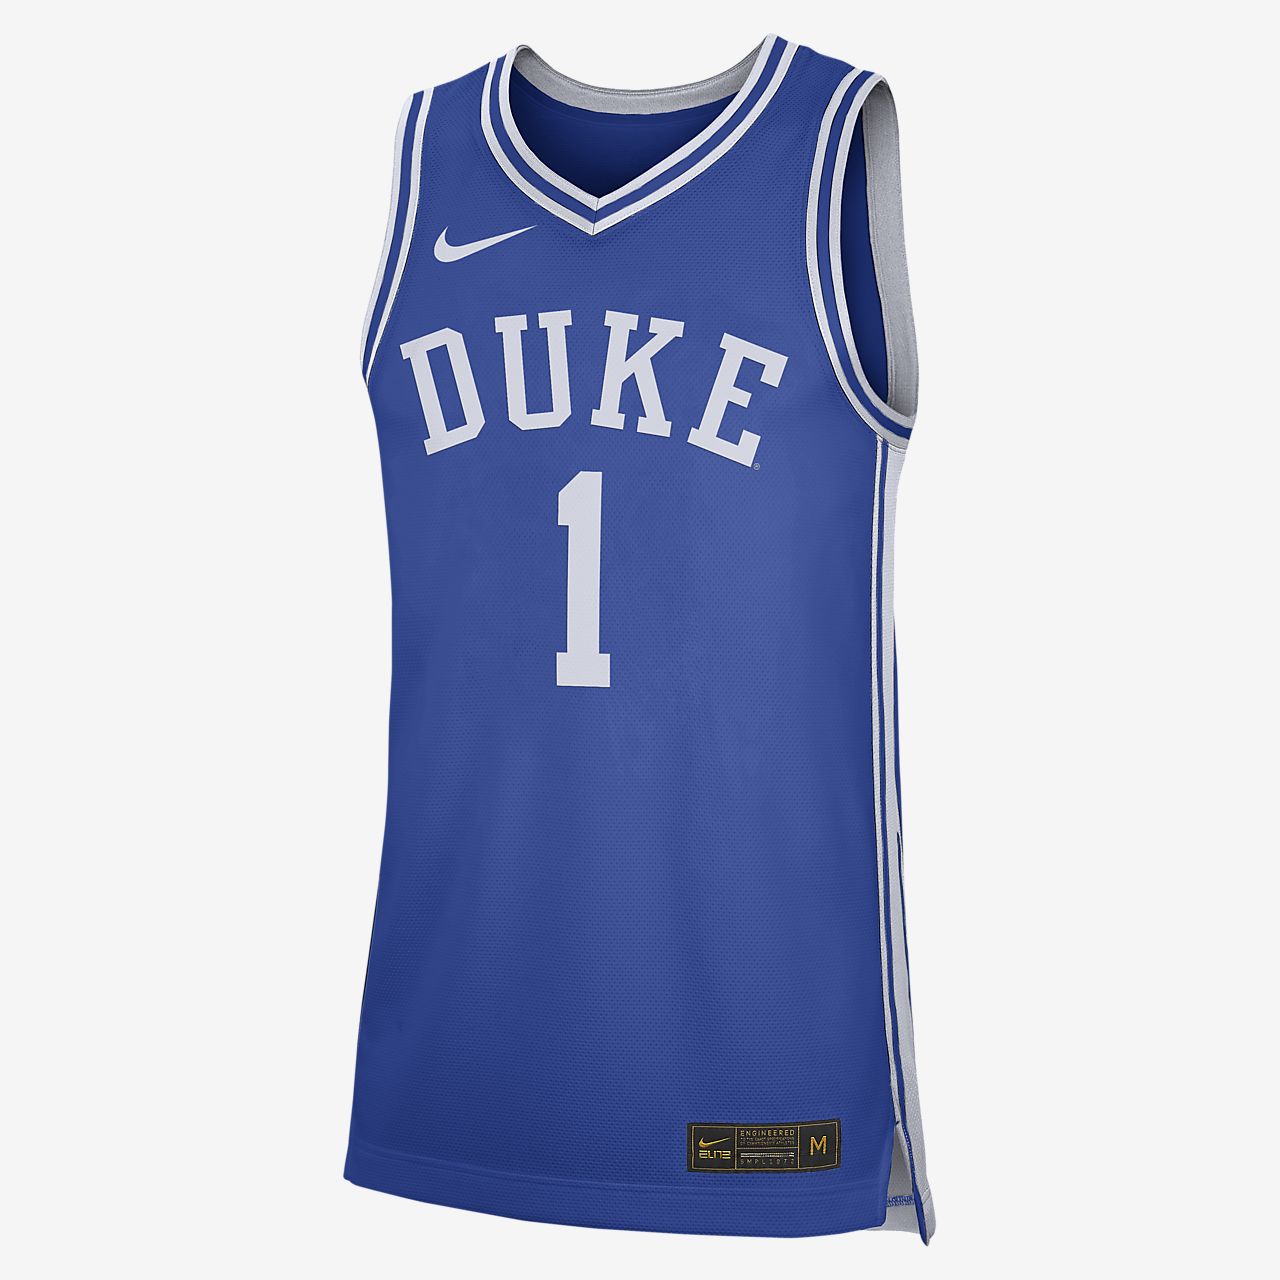 Nike College Replica (Duke) Men's Basketball Jersey.